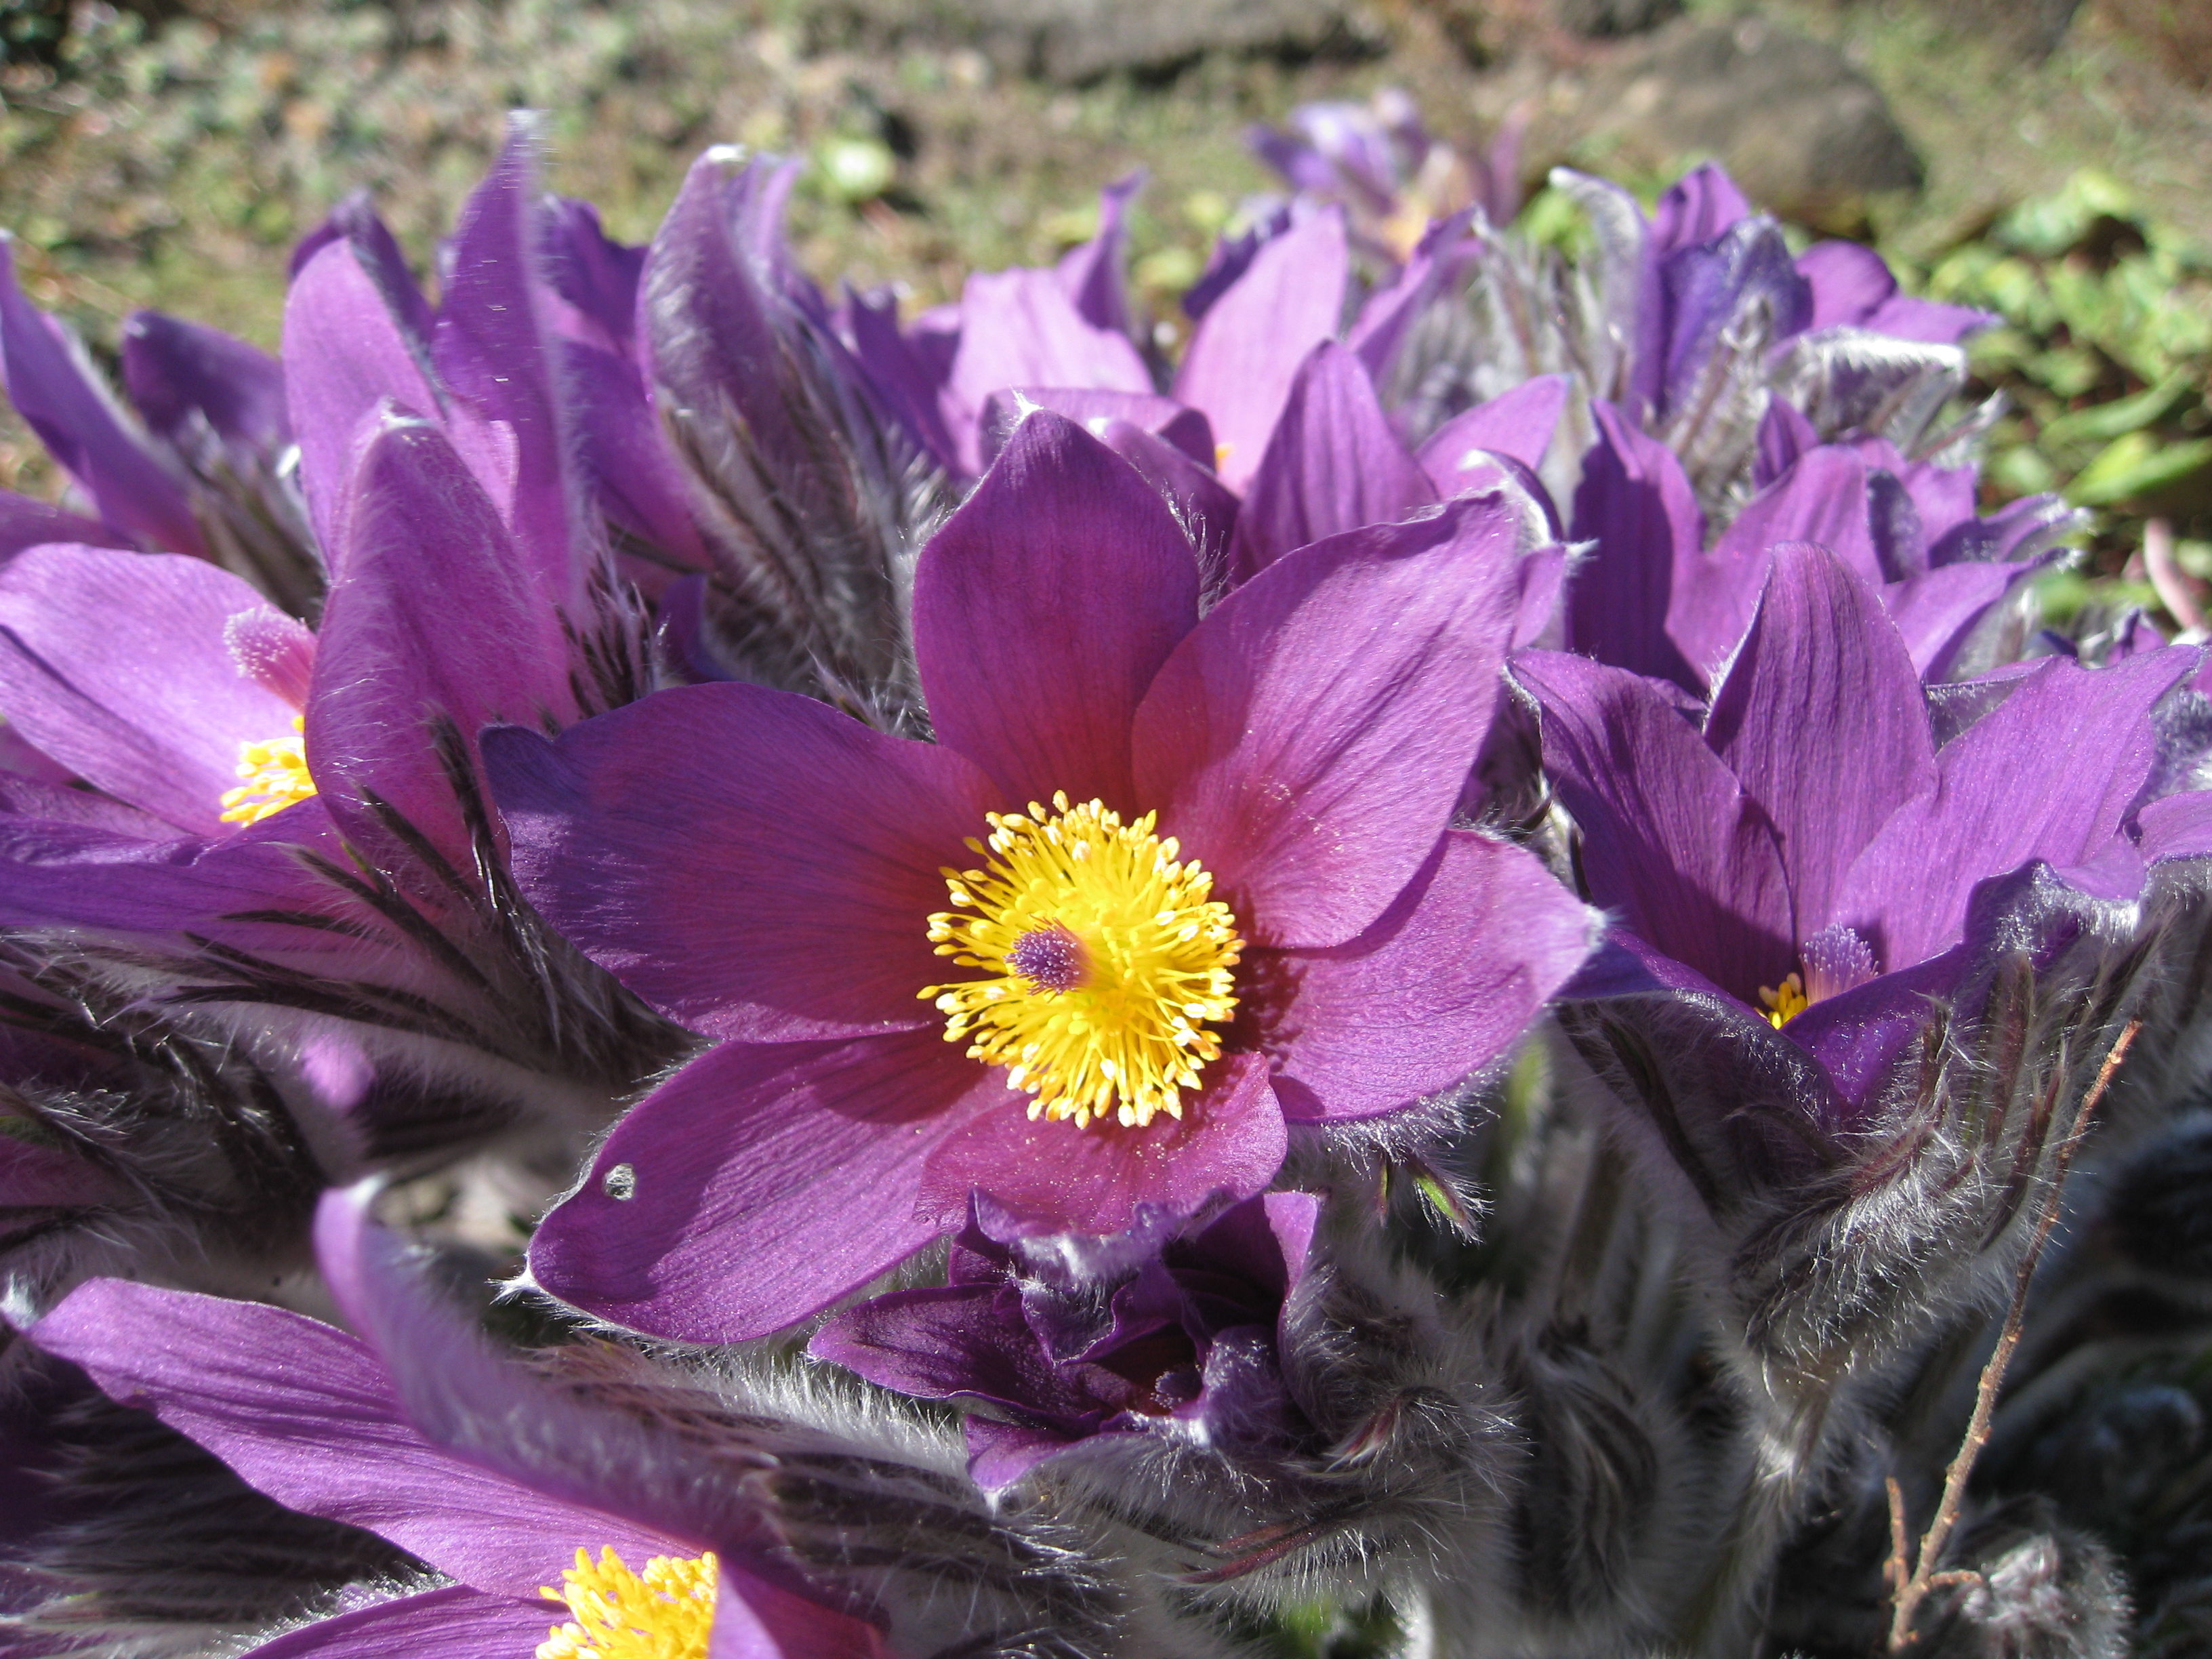 File:Flickr - brewbooks - Pasque flower.jpg - Wikimedia Commons